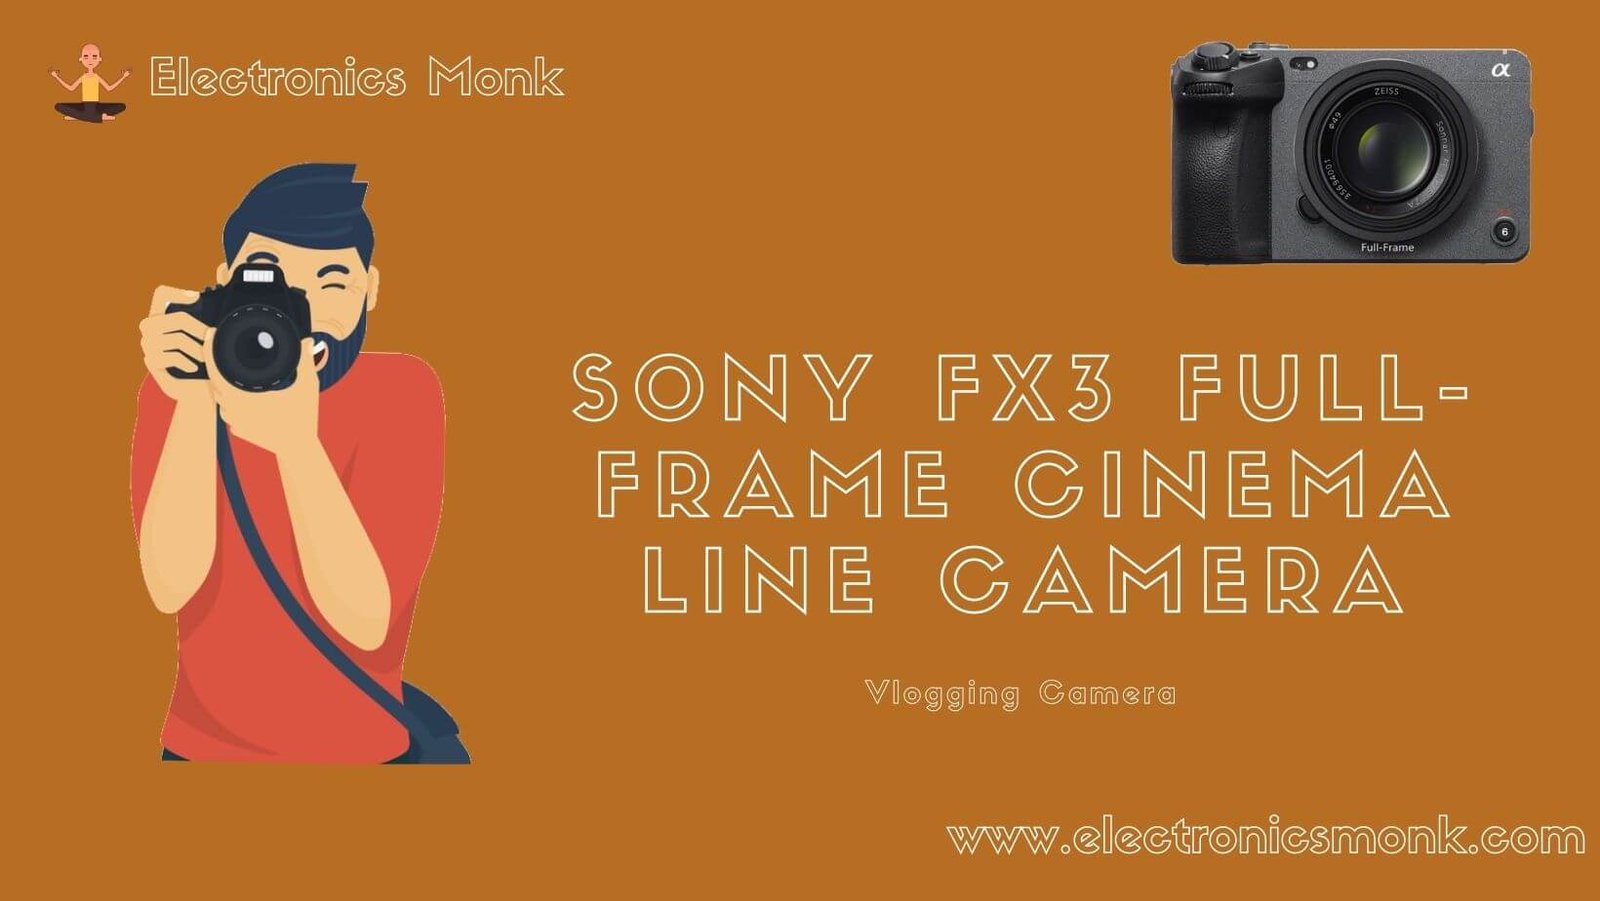 Sony FX3 Full-Frame Cinema line Camera